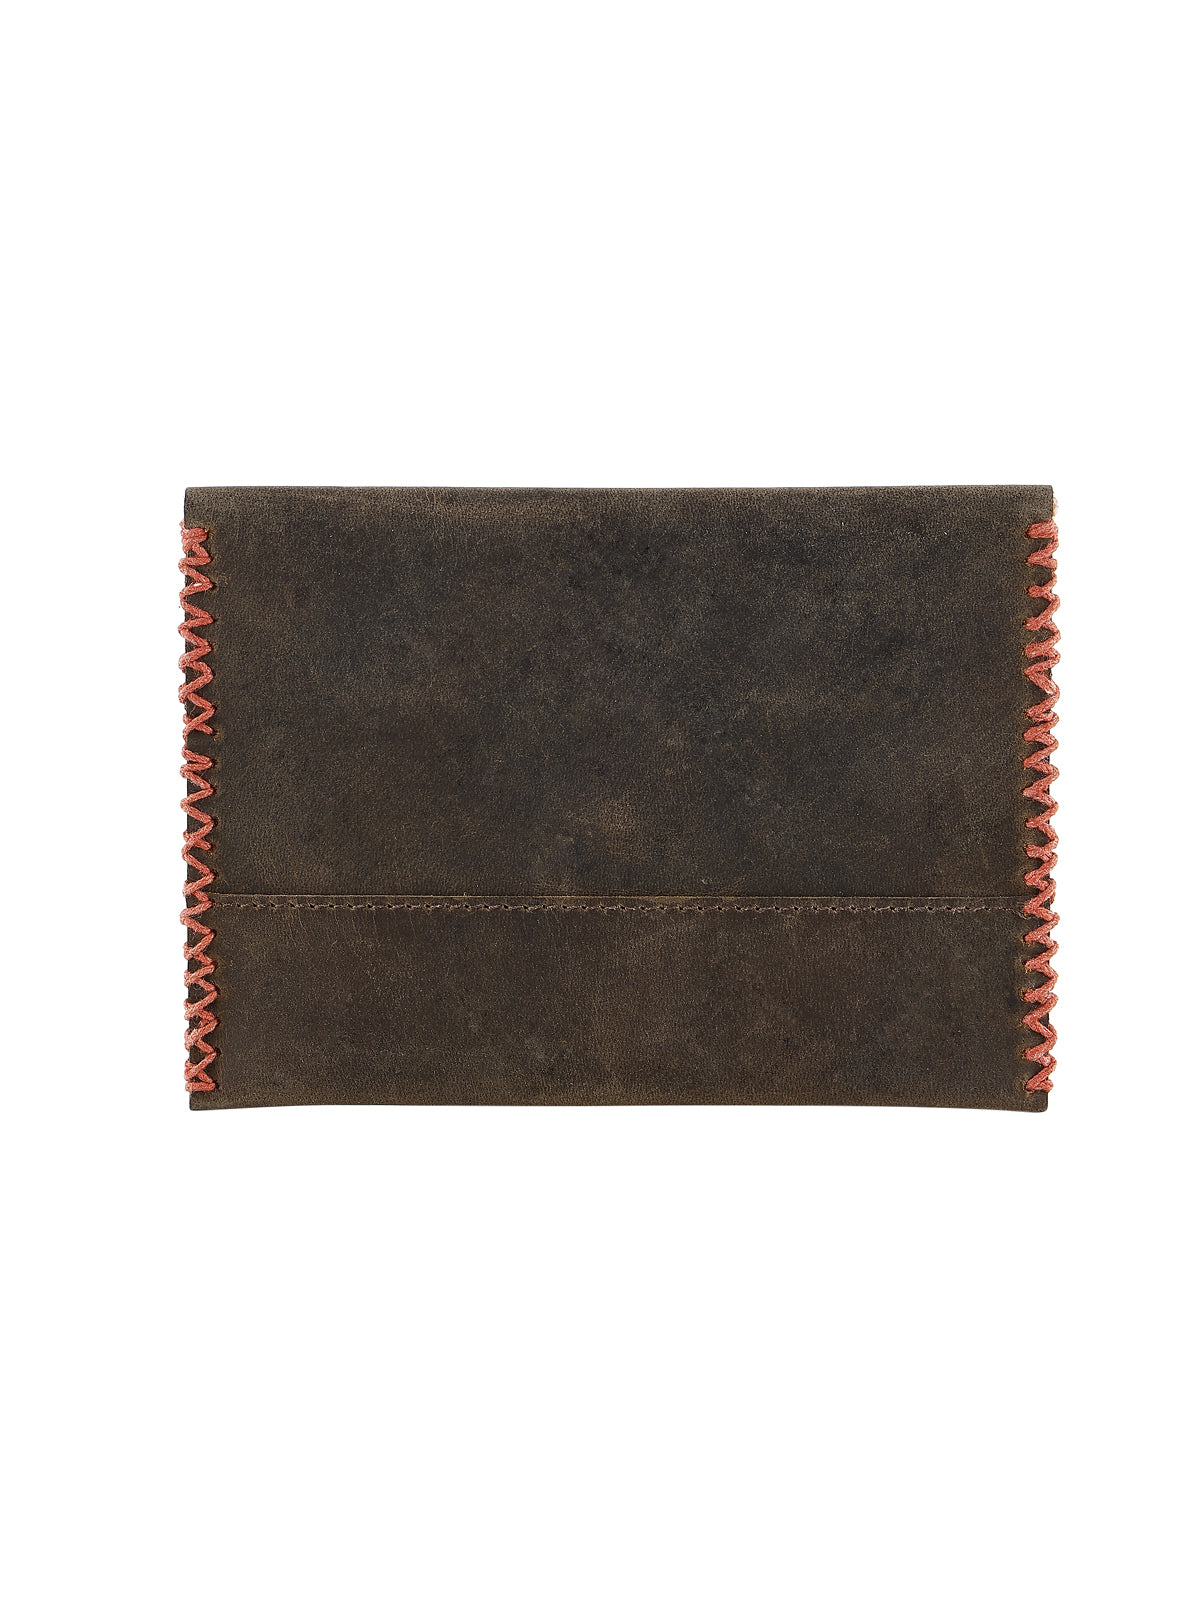 Genunie Leather Brown Antic Design Travel Wallet for Men & Women